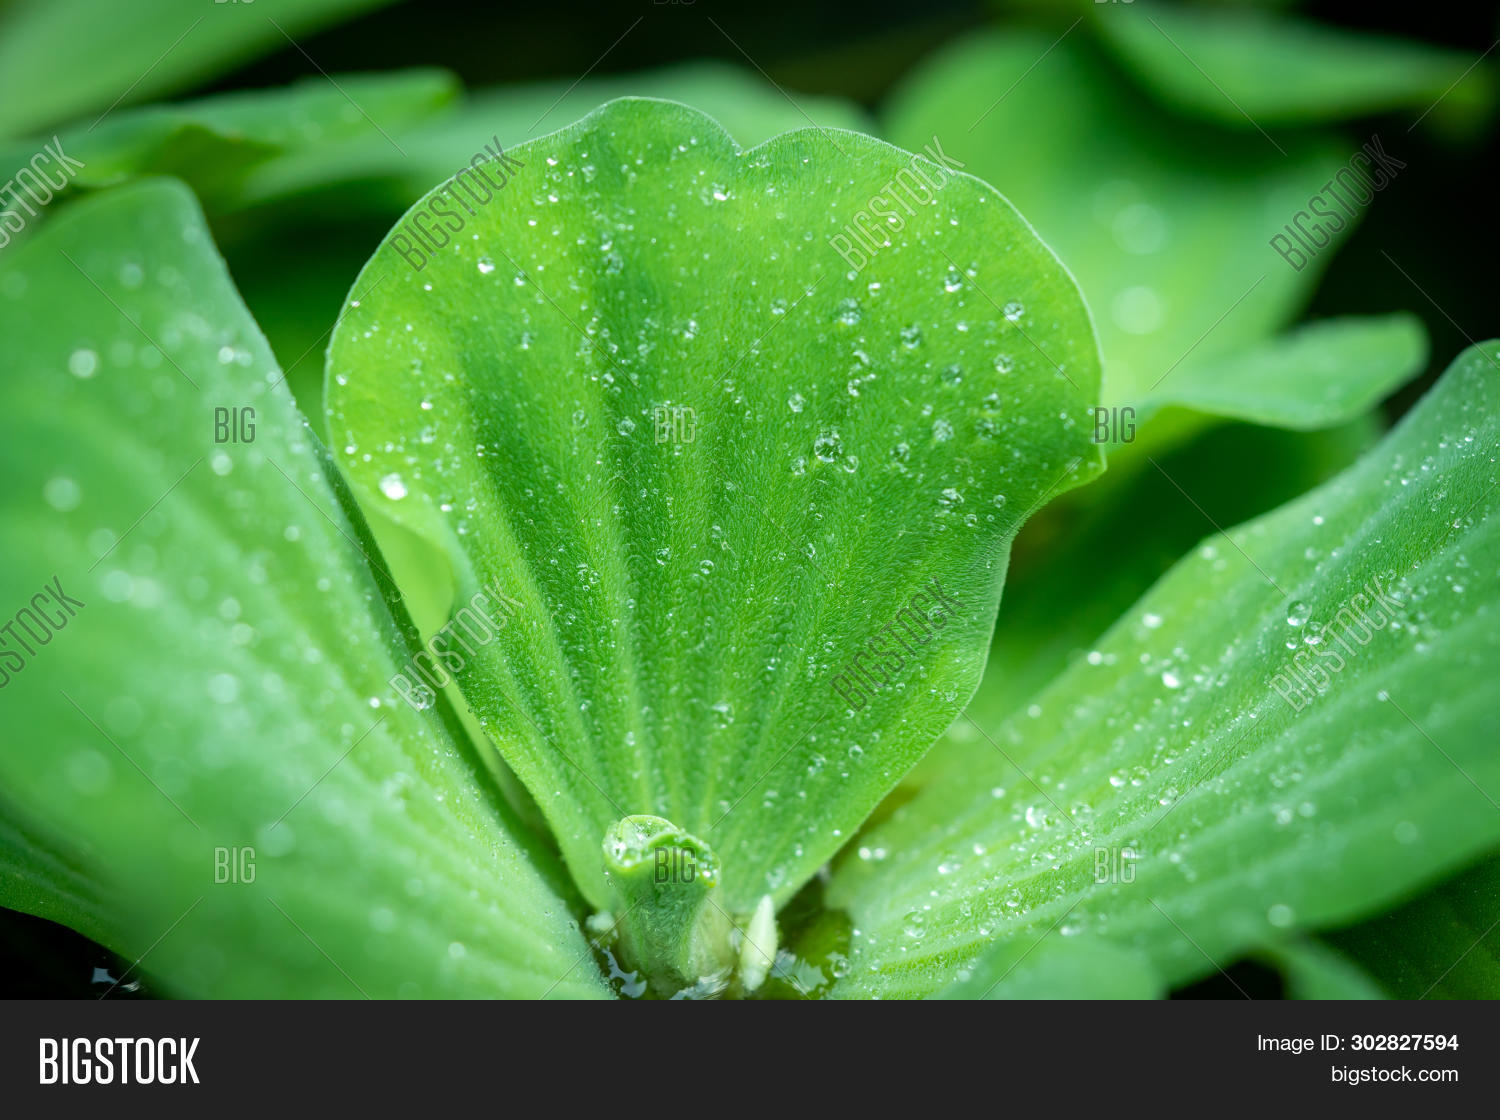 Leaves-of-Water-lettuce